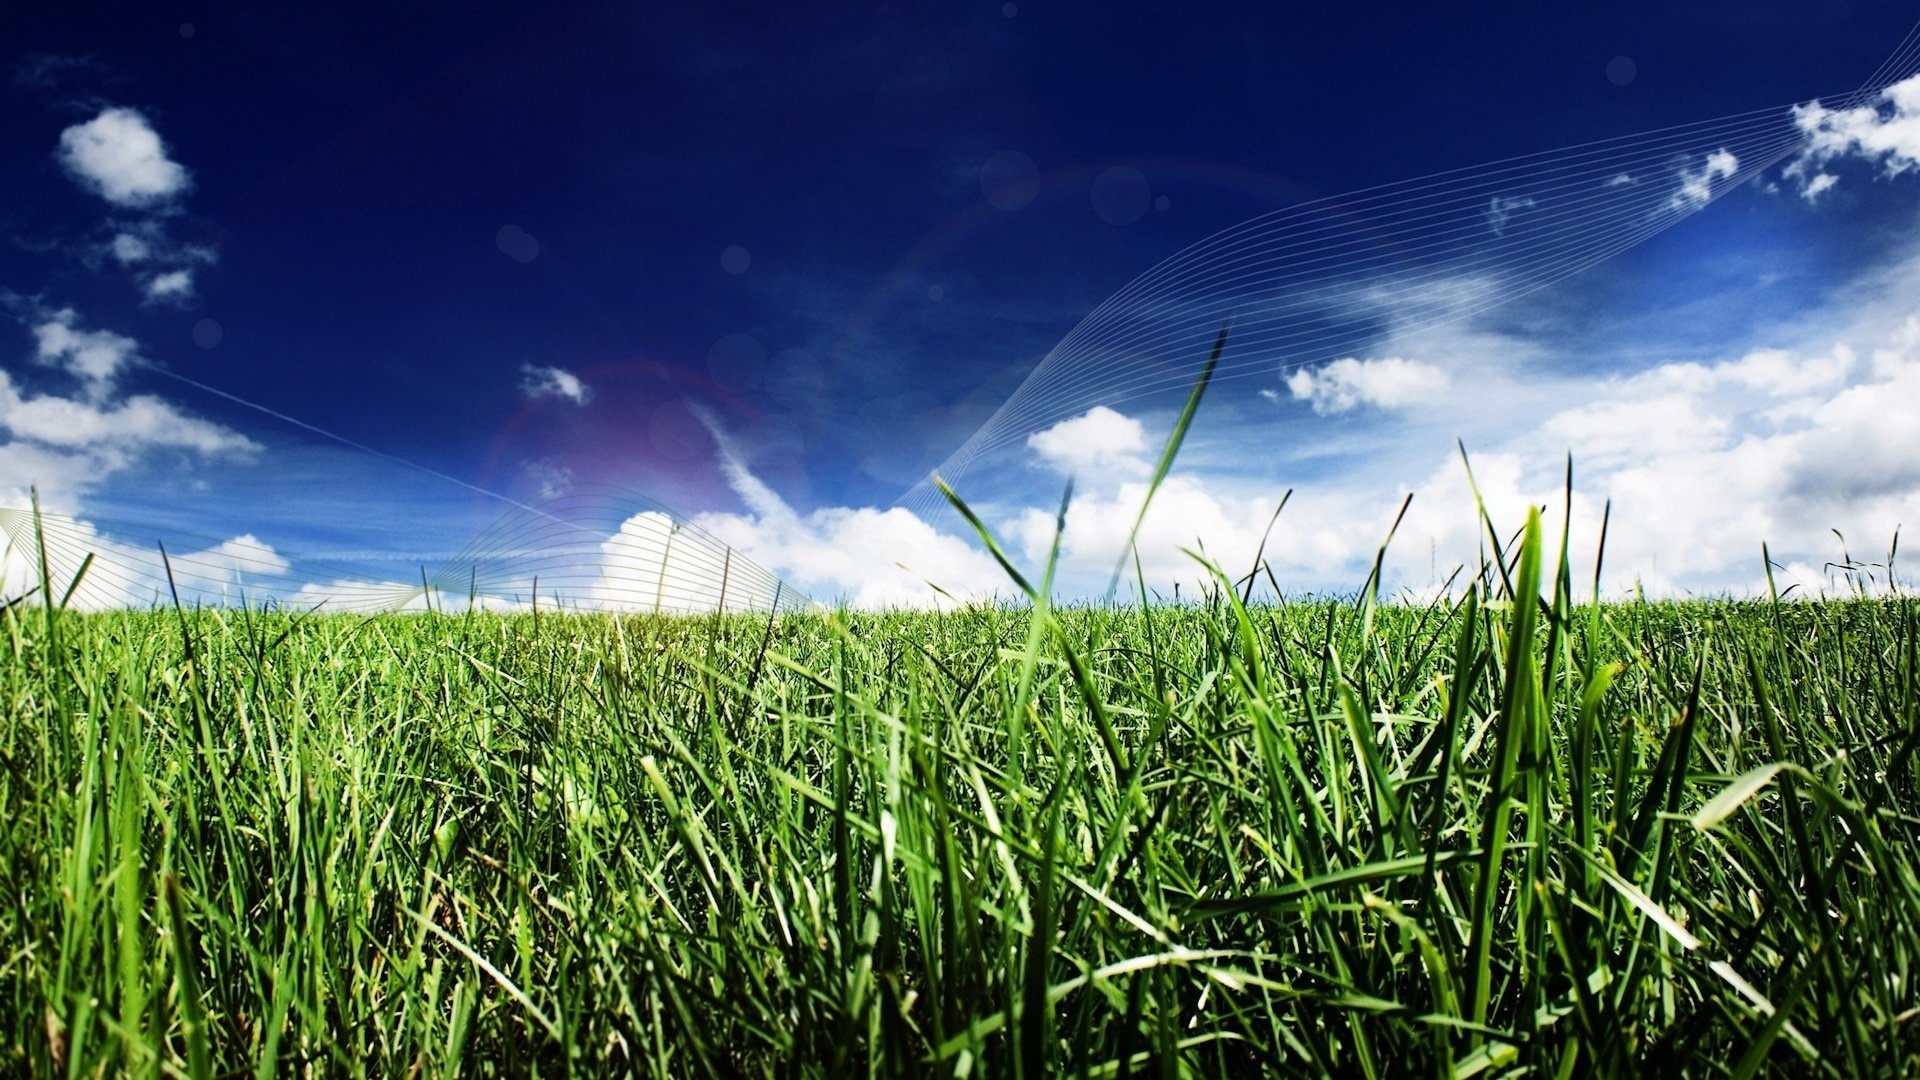 Sky And Grass HD Wallpaper